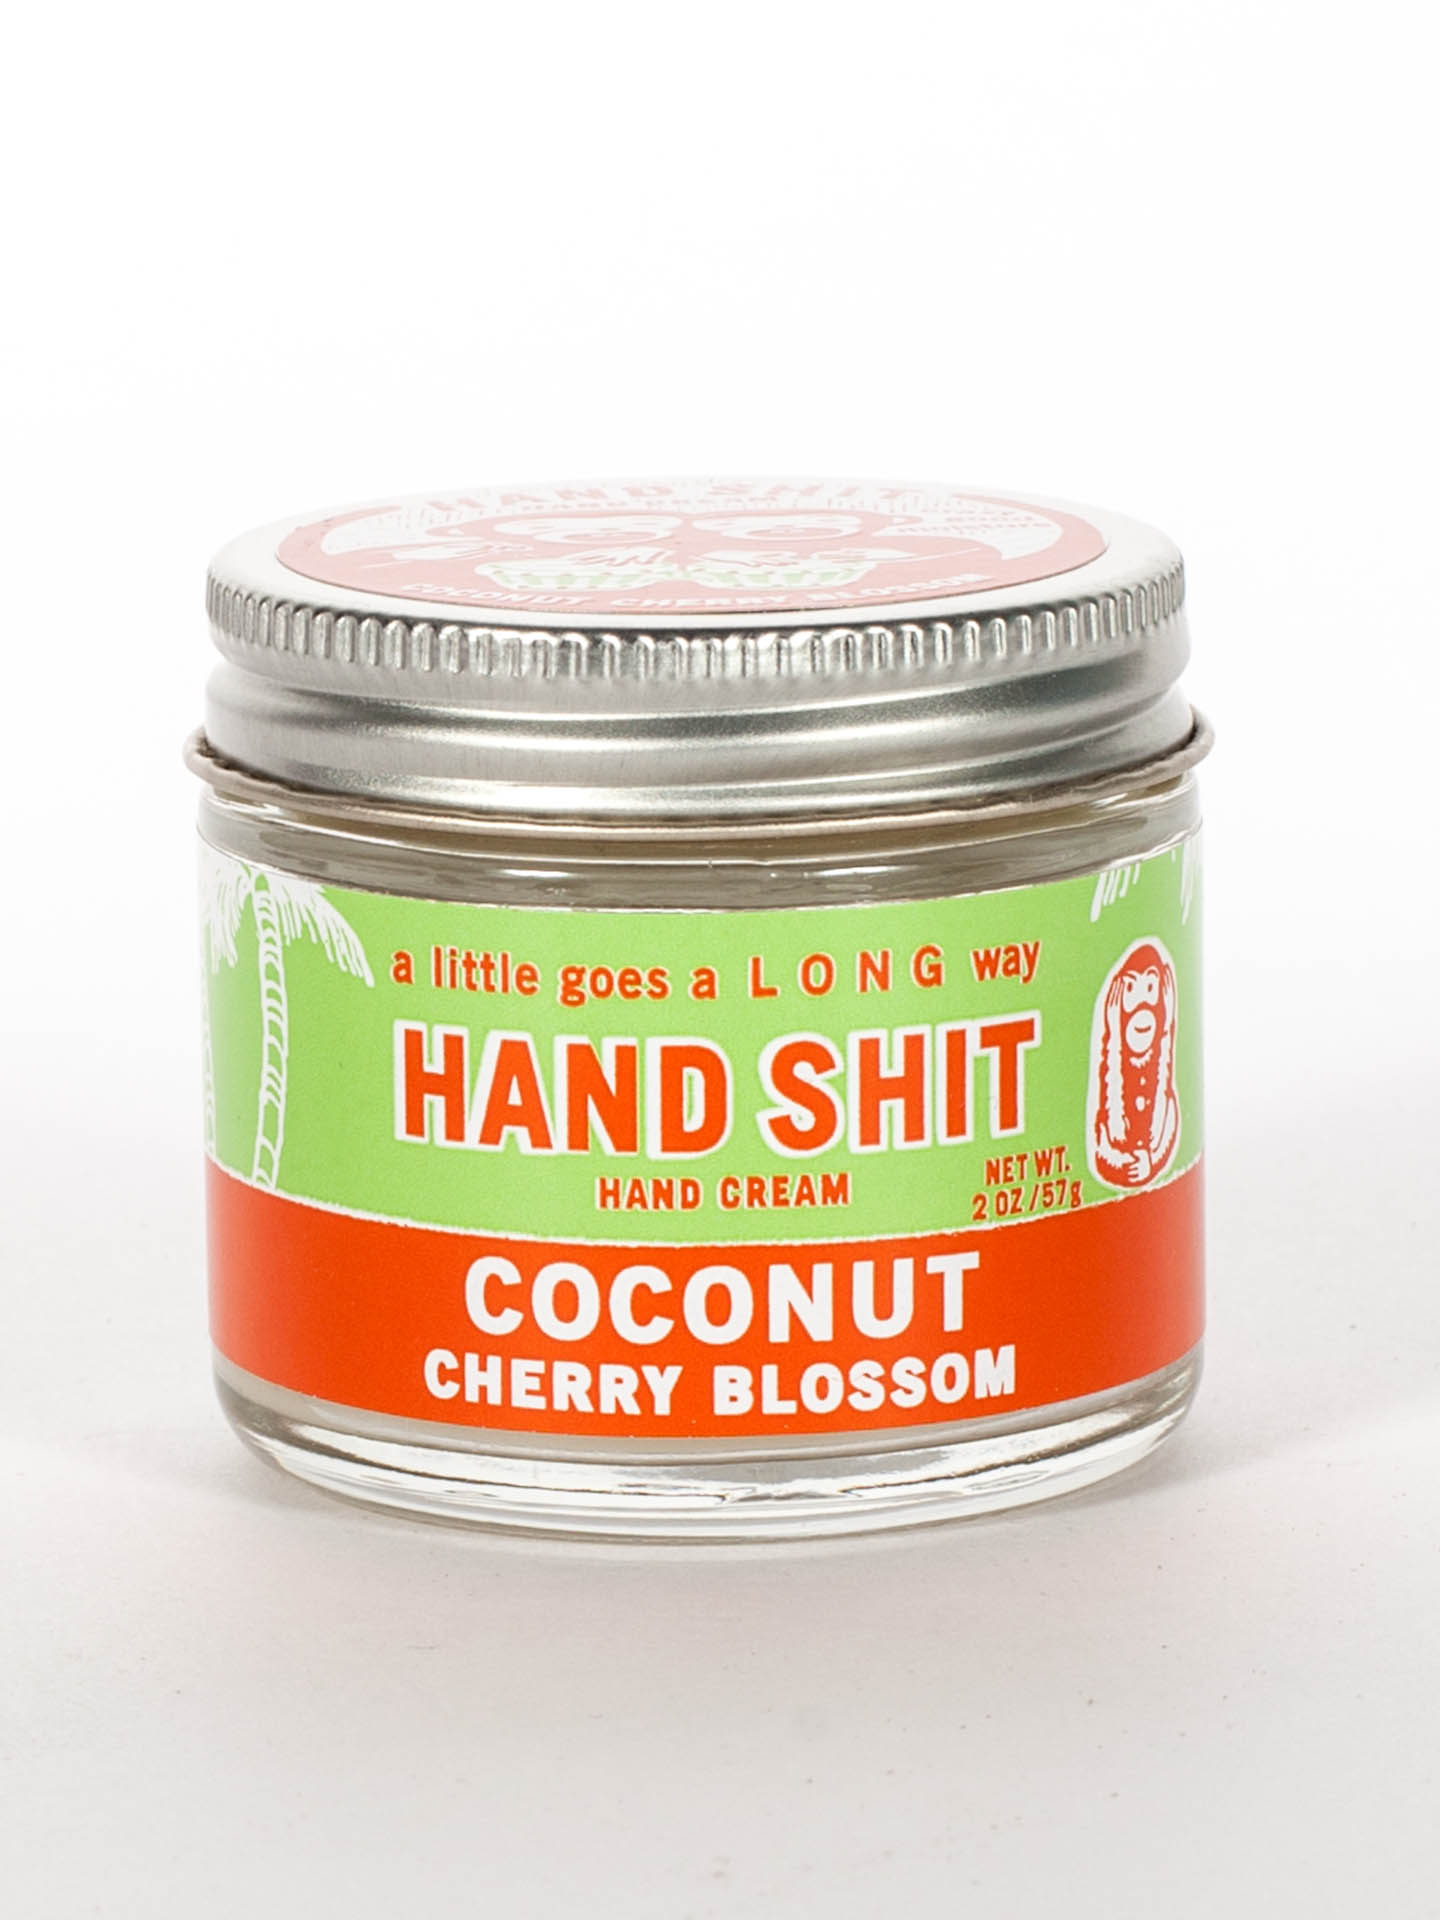 Hand Shit Coconut Cherry Blossom